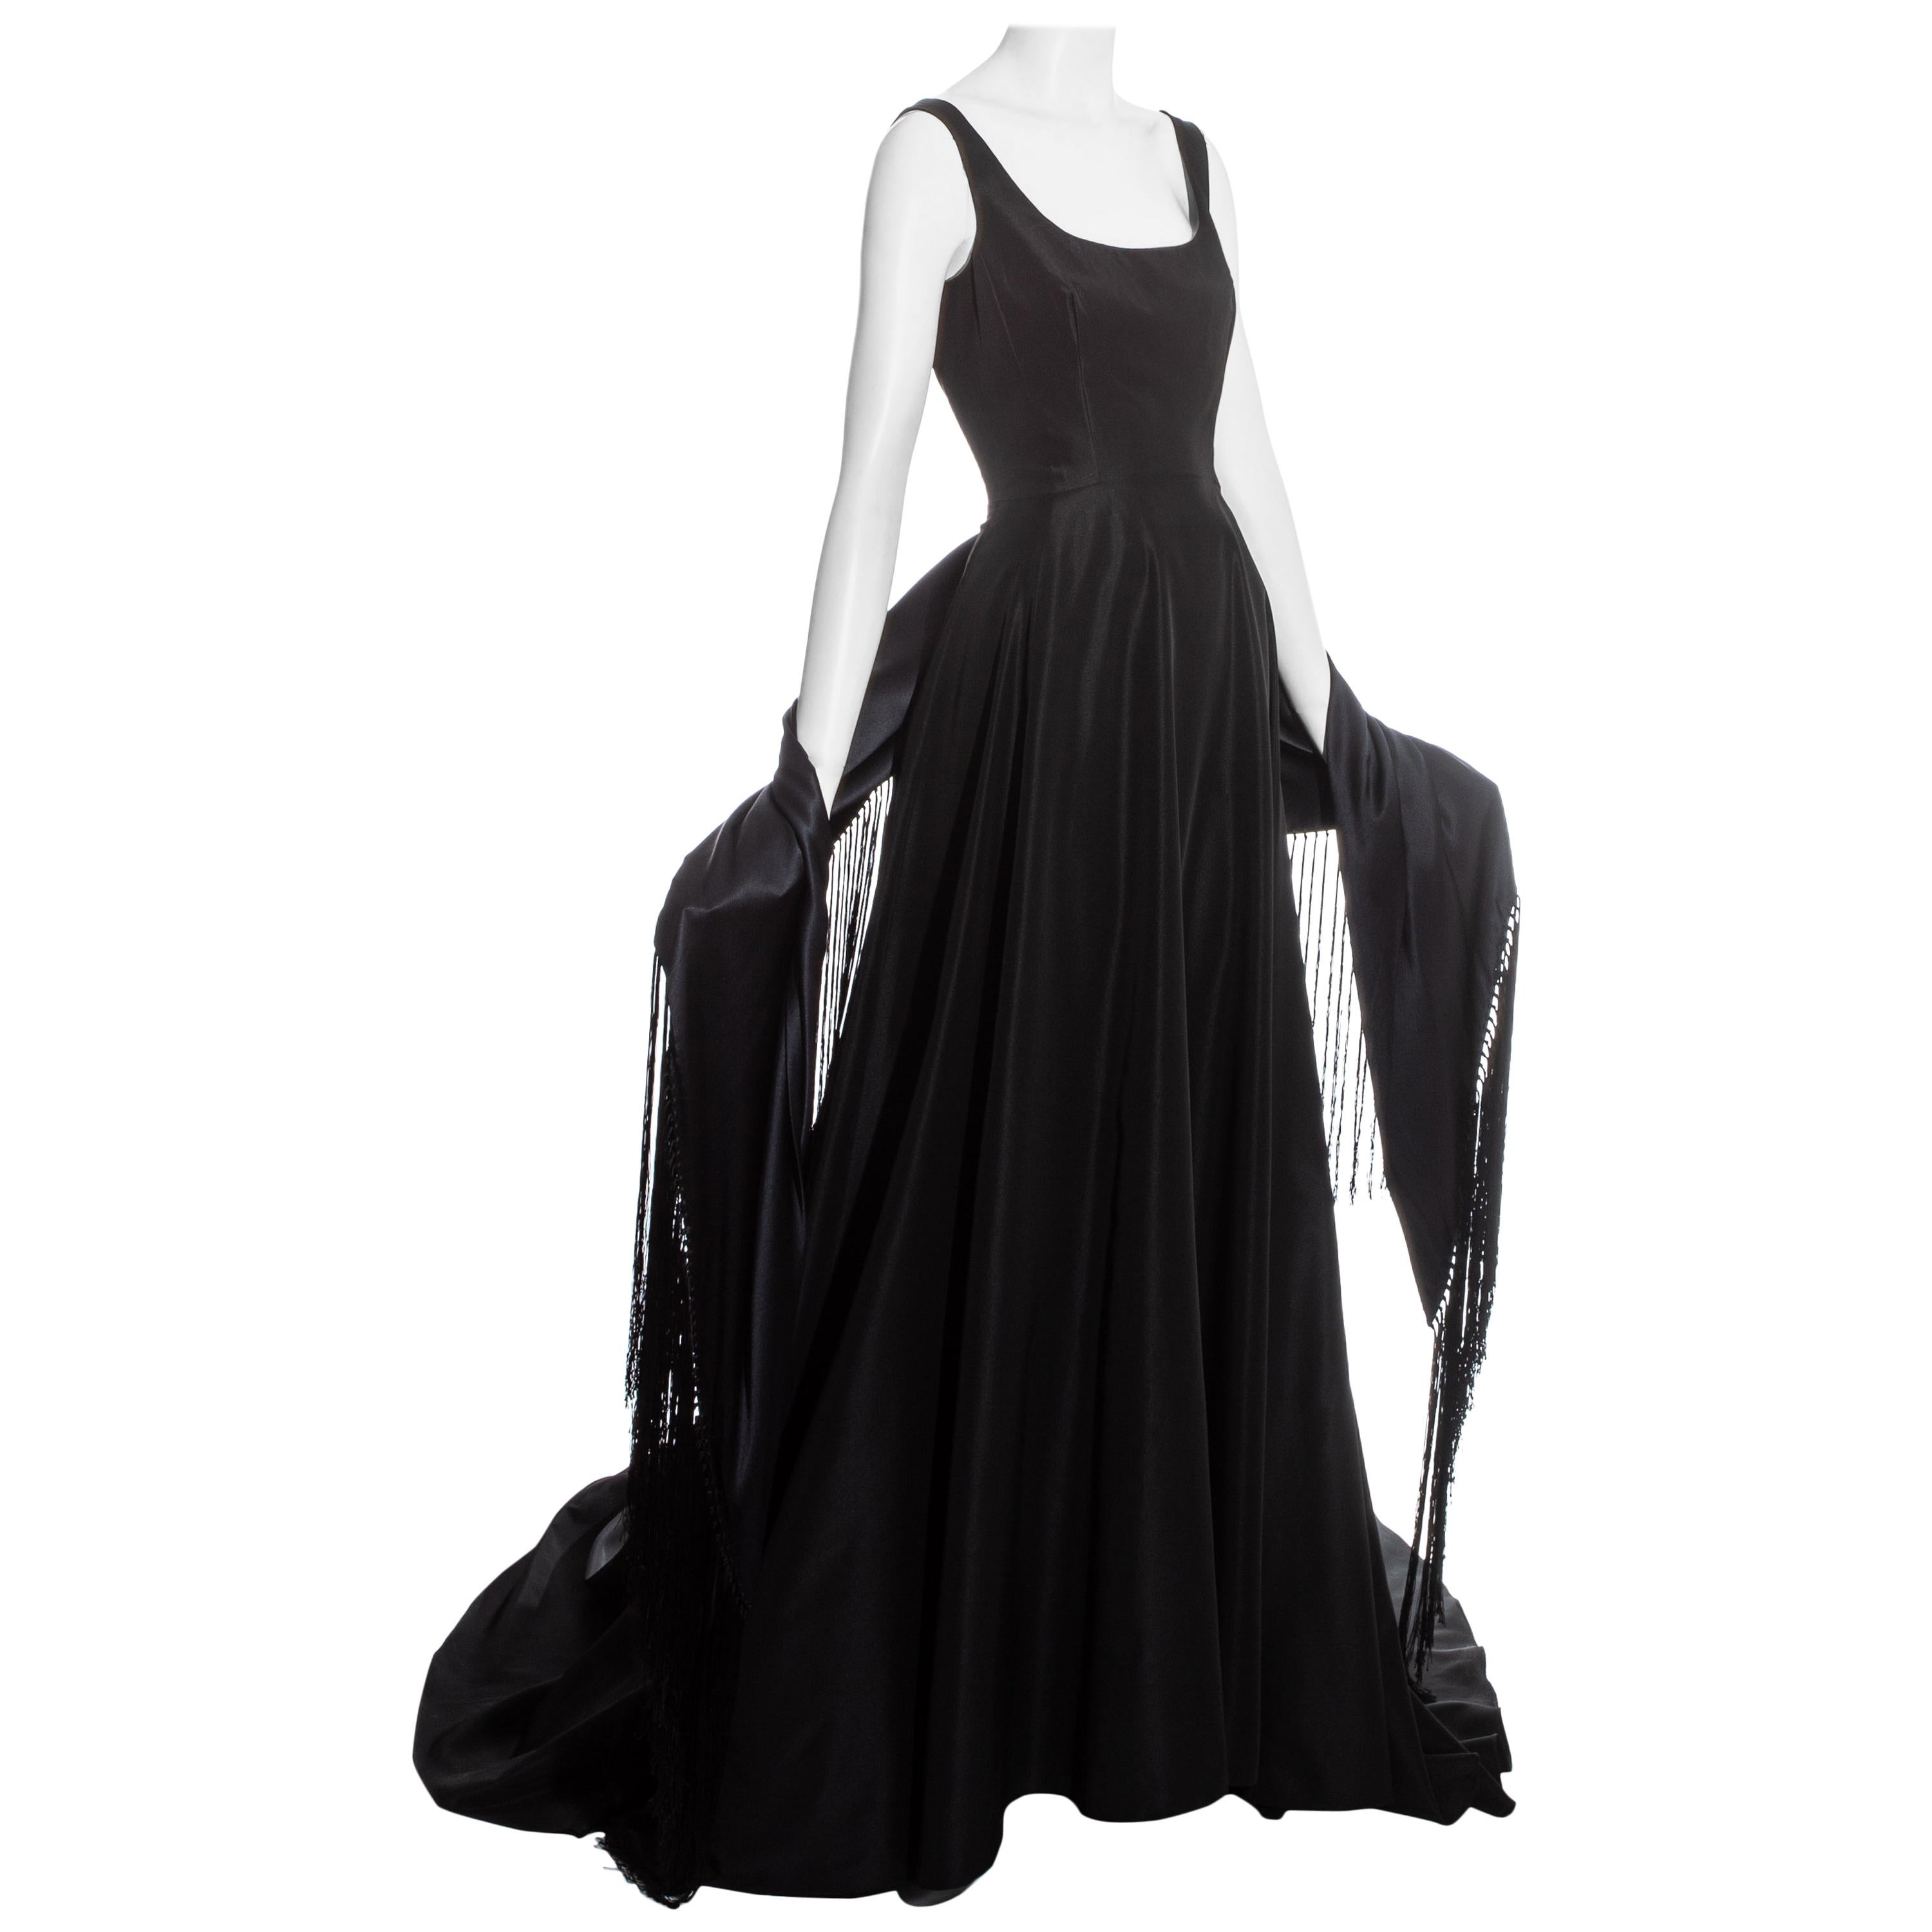 Dolce & Gabbana black evening dress with train and fringed shawl, fw 1998